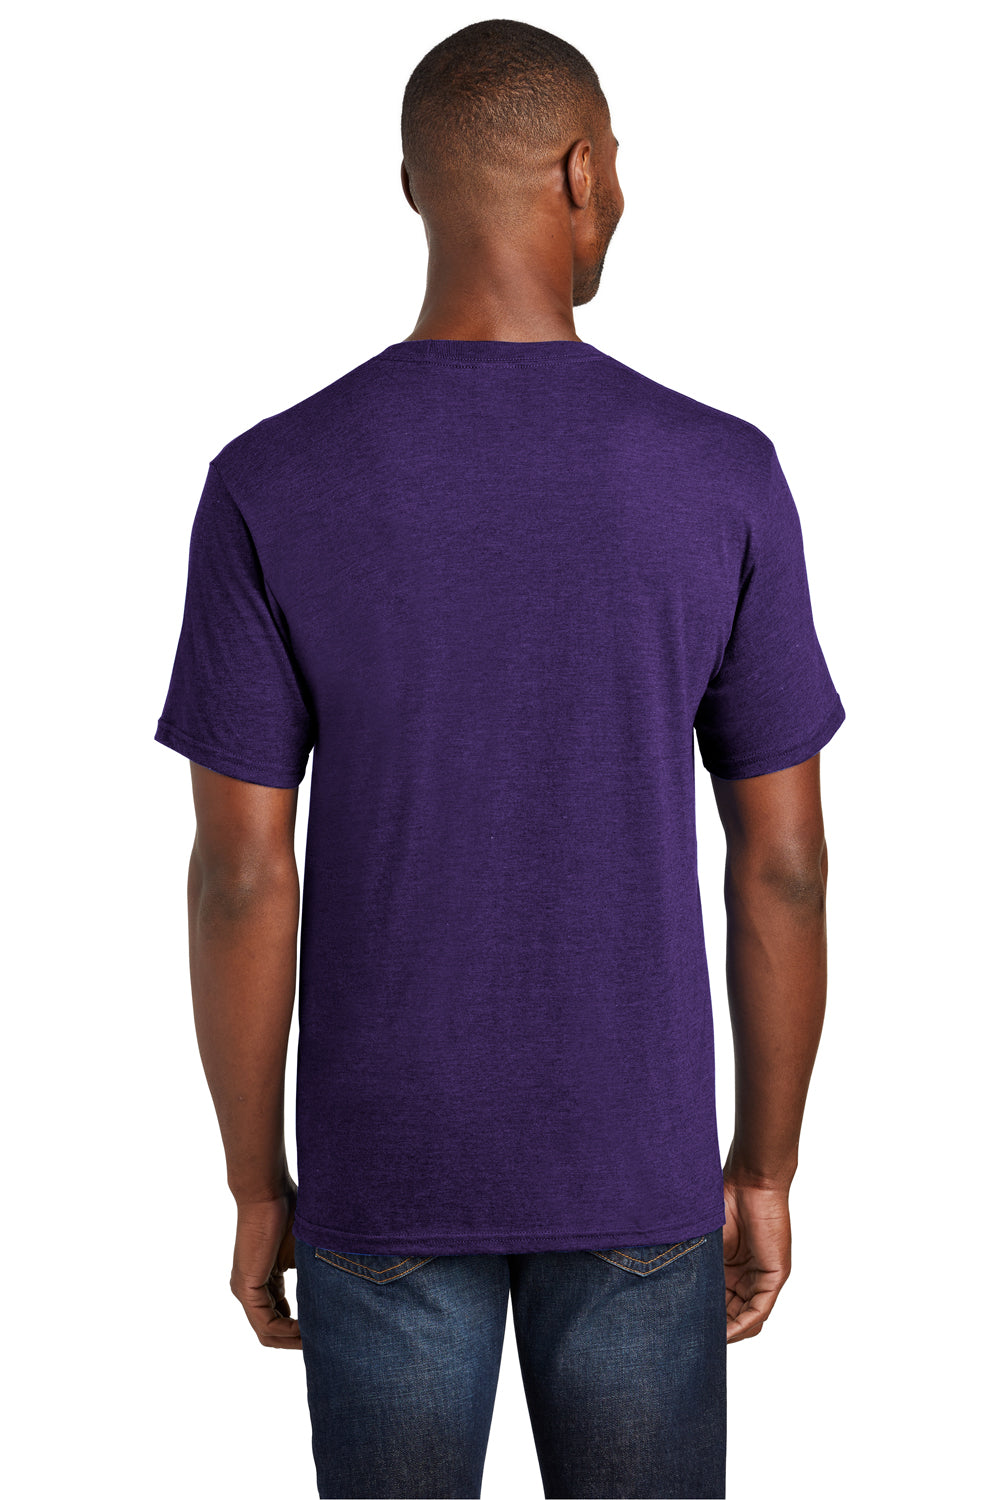 Port & Company PC455 Mens Fan Favorite Short Sleeve Crewneck T-Shirt Heather Purple Back